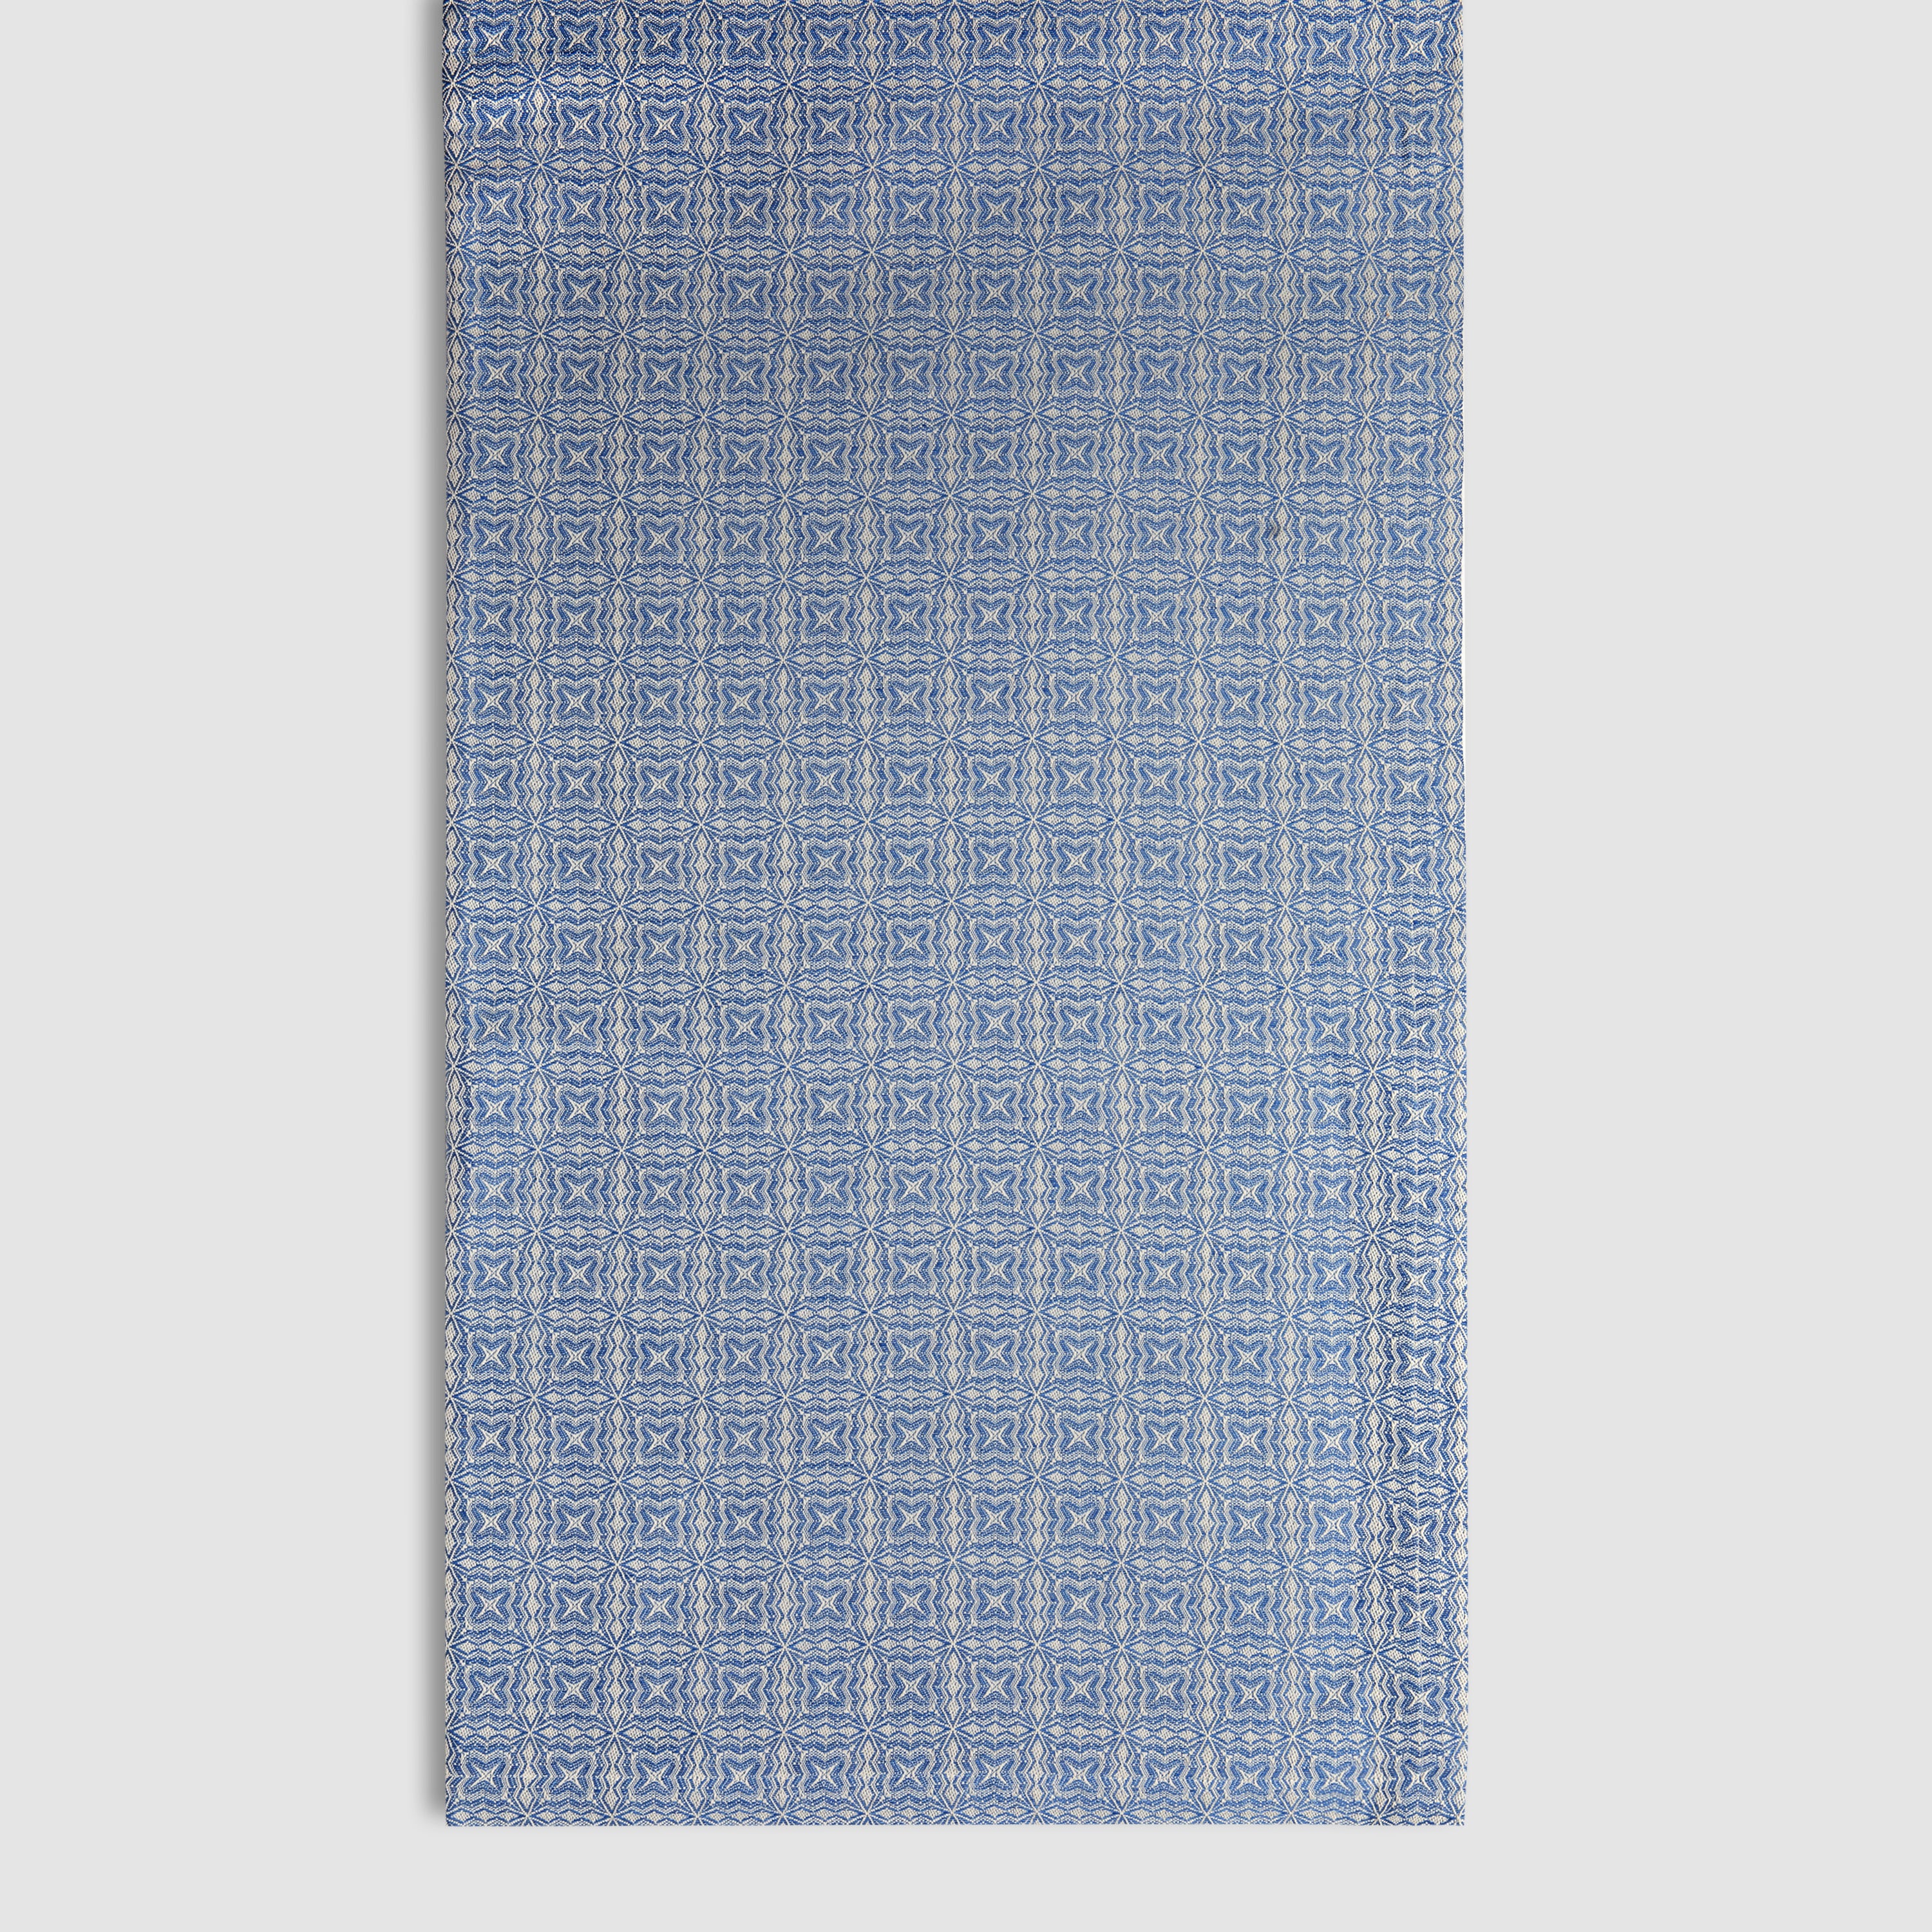 Made to Measure - Étoile Tablecloth, Bleu Égyptien